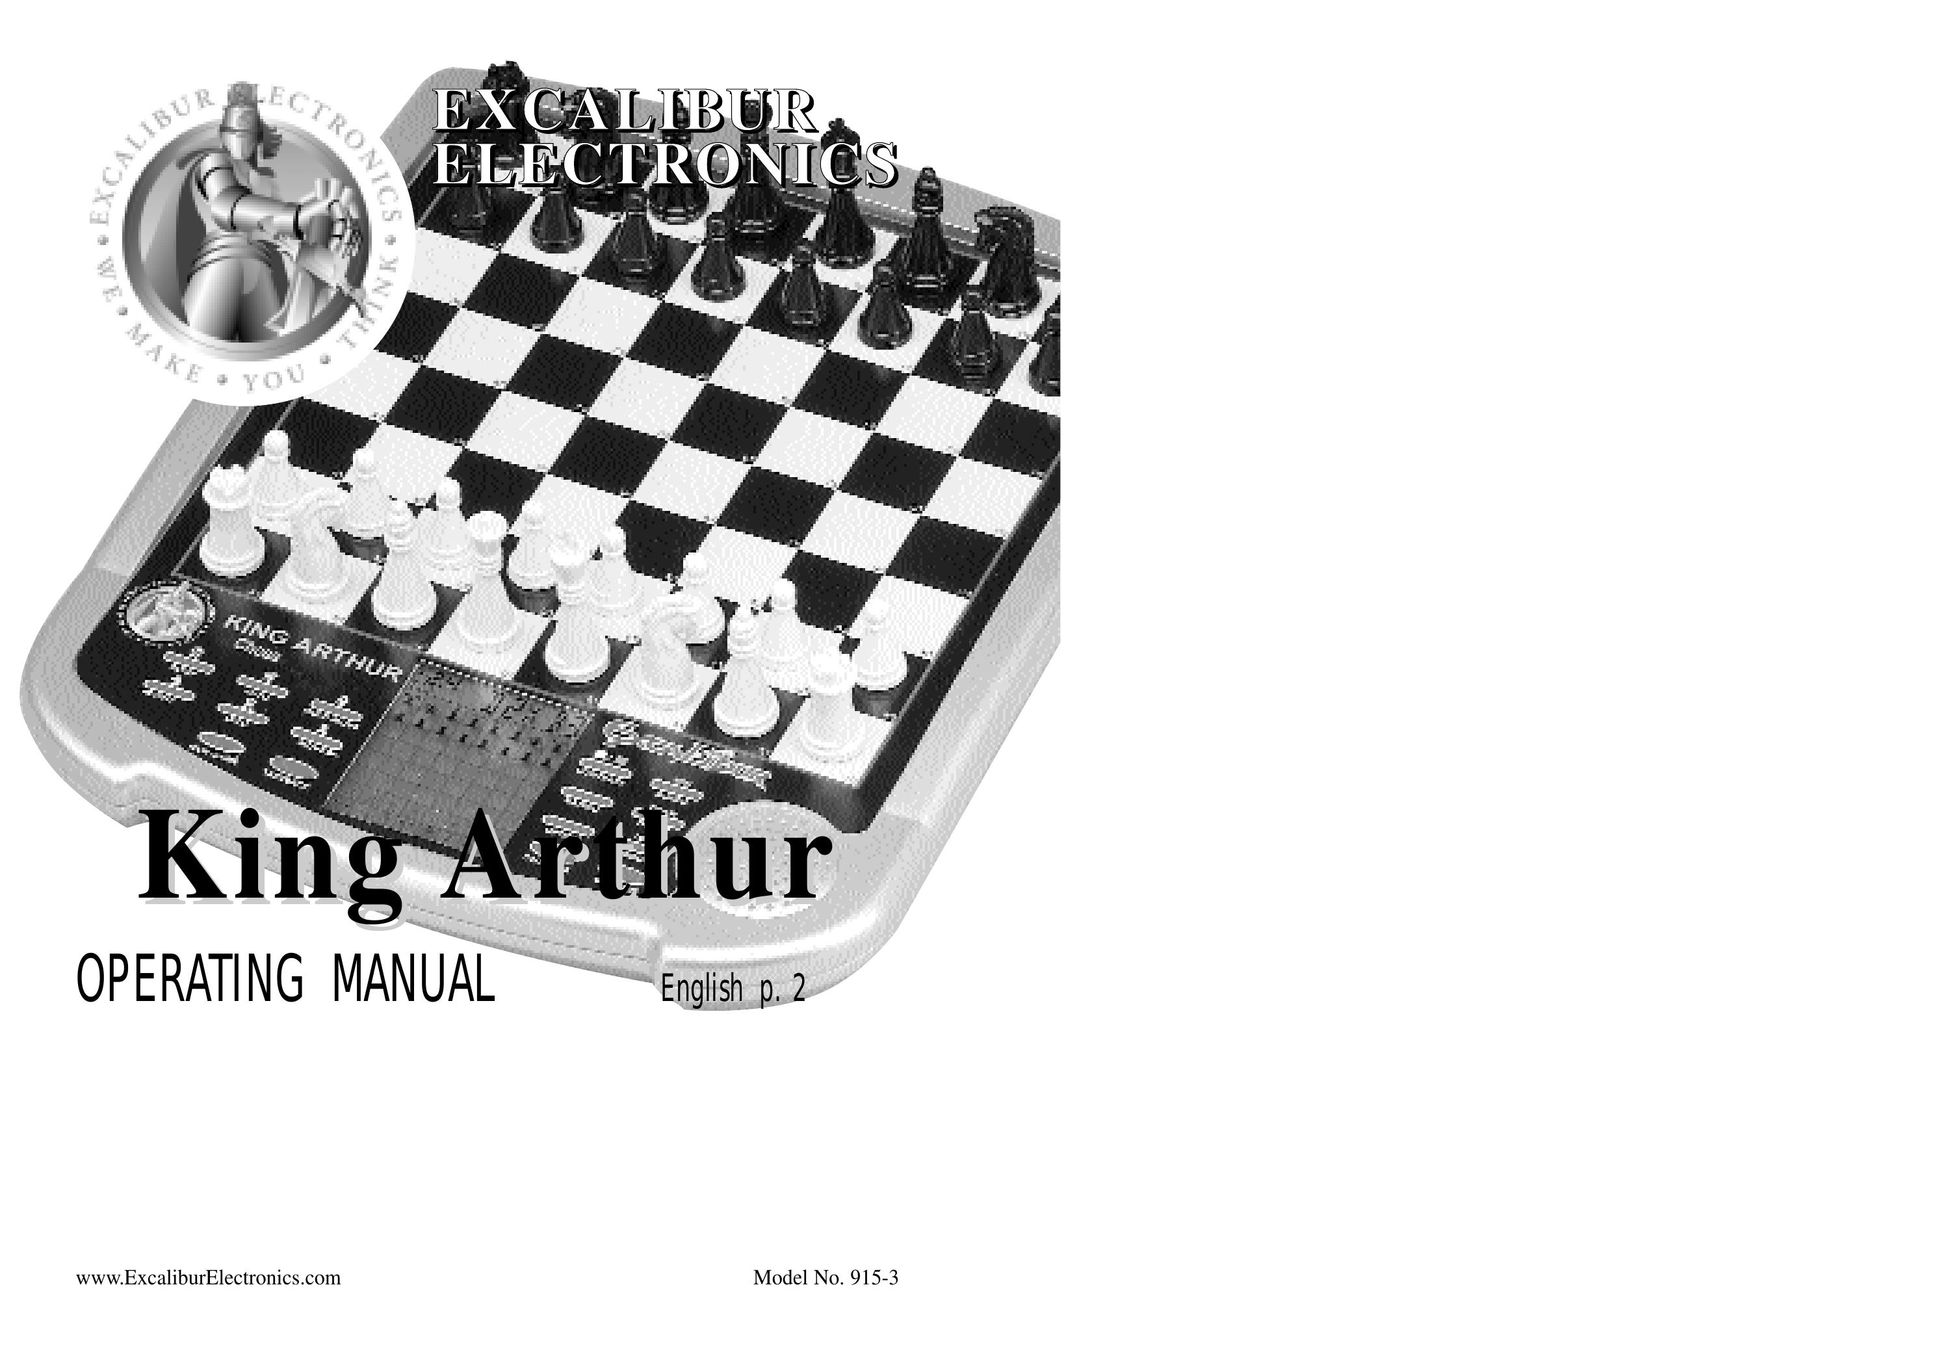 Excalibur electronic 915-3 Games User Manual